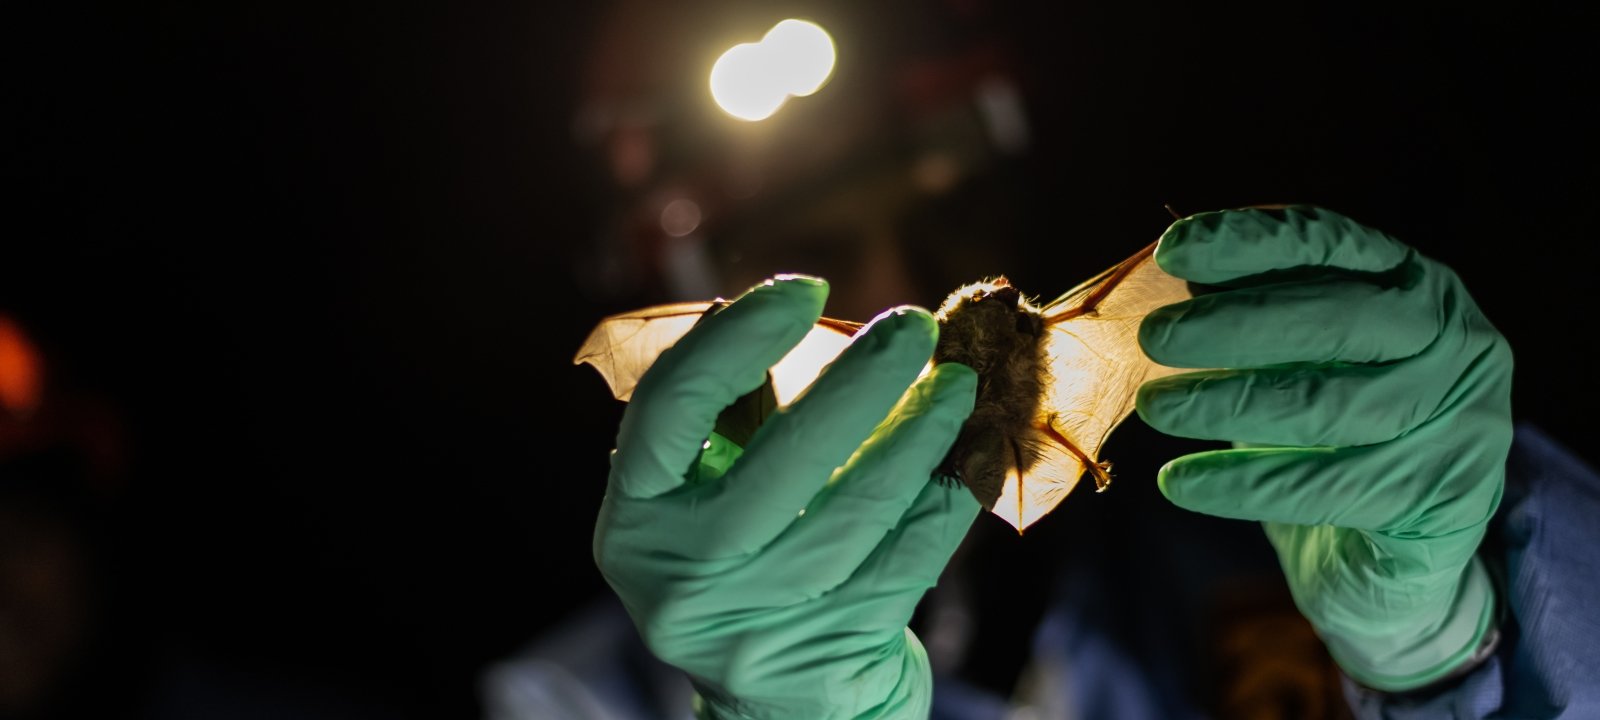 Inspecting a bat by headlight